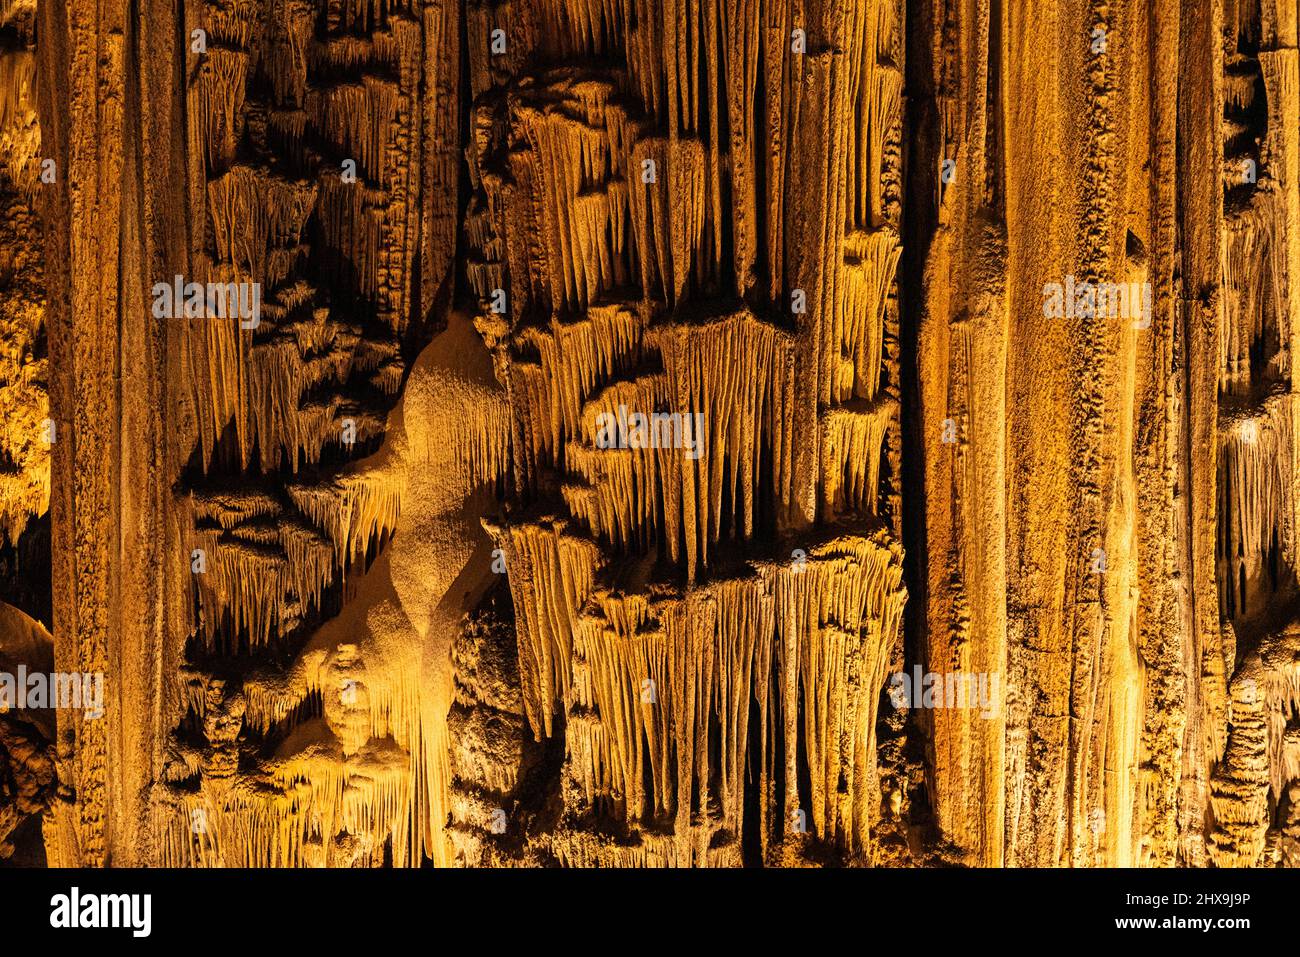 Mighty stalactites and stalagmite form the impressive scenery of the “Cueva de Nerja” dripstone cave, near Málaga, Andalusia, Spain Stock Photo